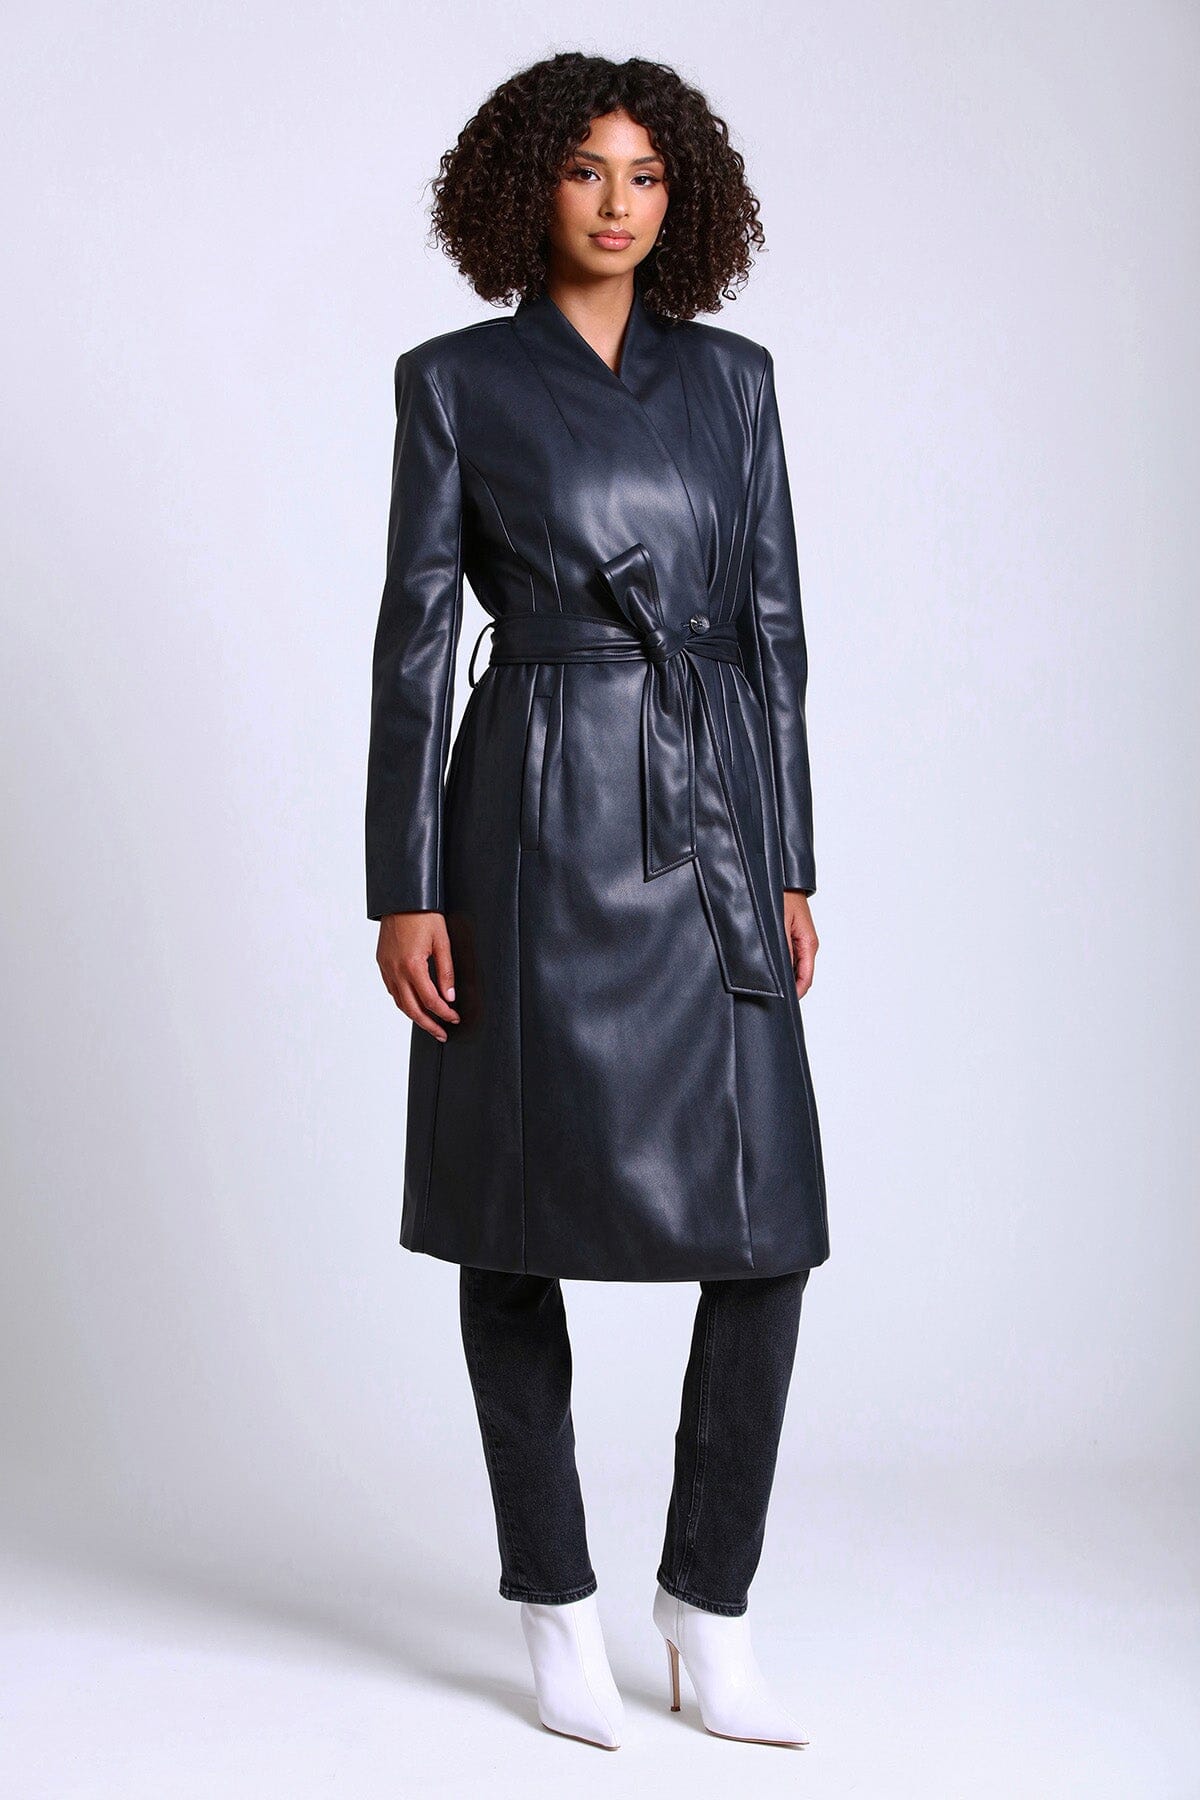 faux ever leather overlap collar coat jacket carbon black - figure flattering designer fashion cute long coats for women